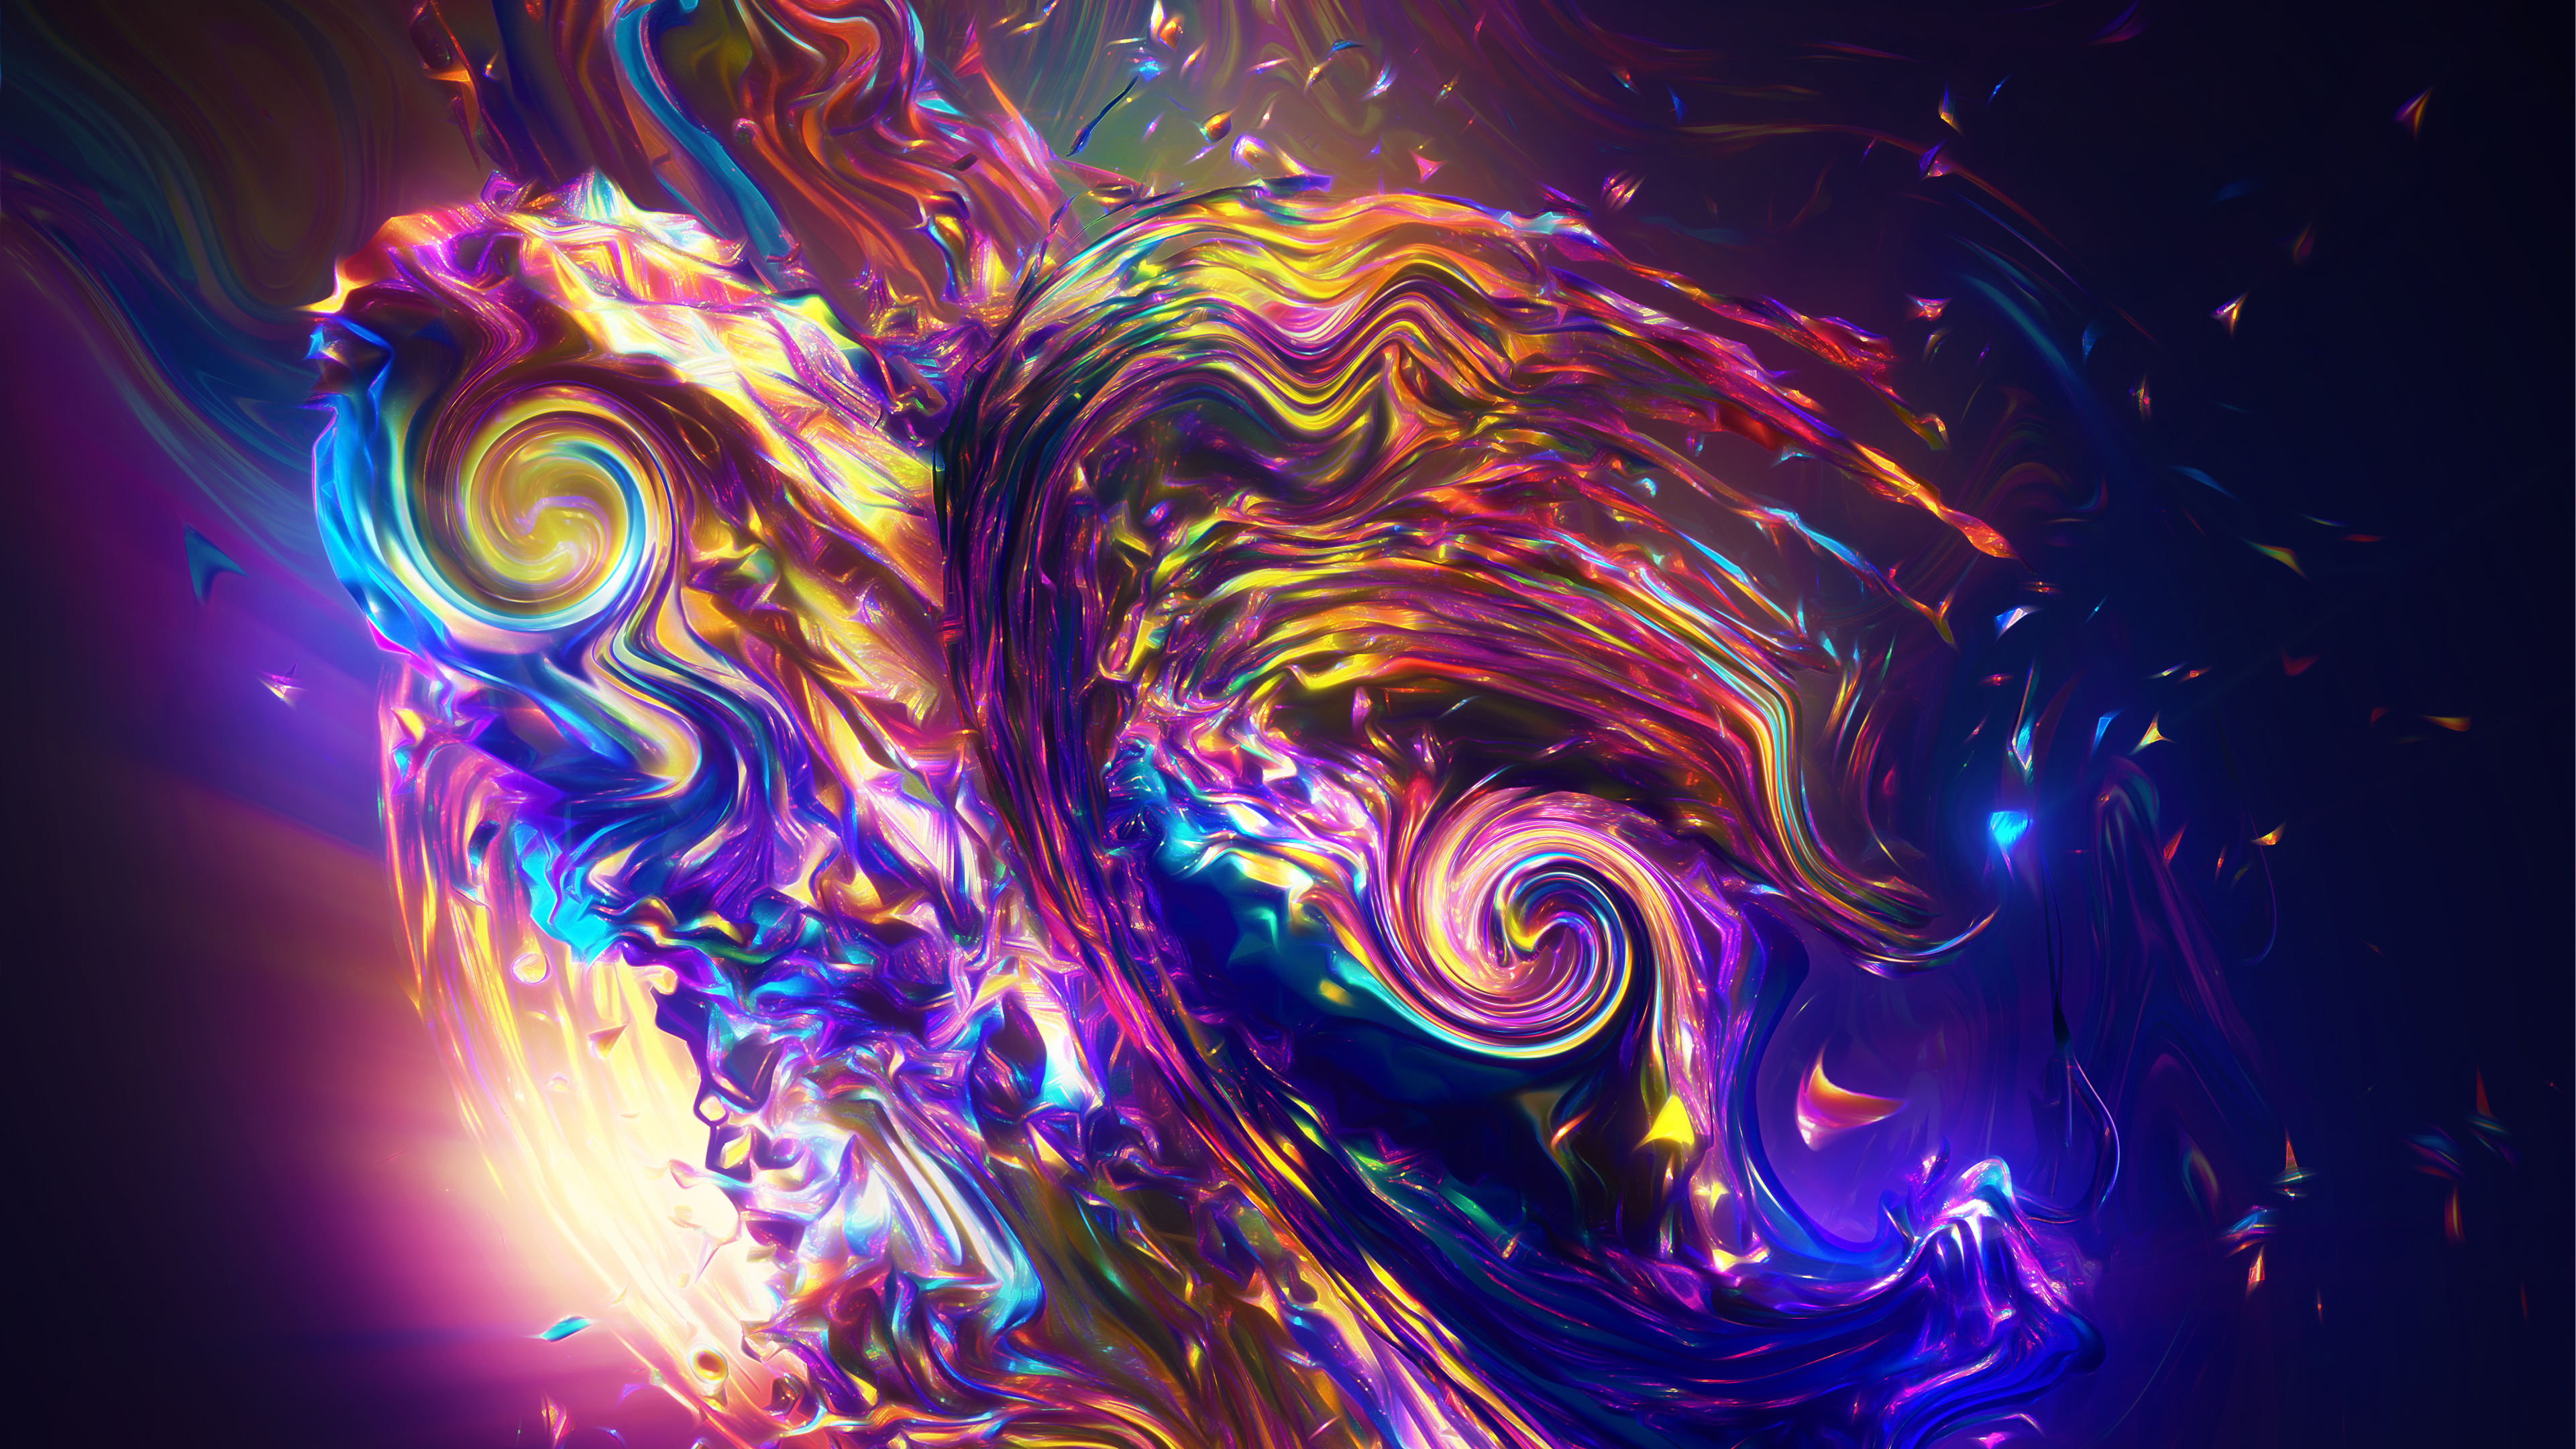 Rainbow Colored Swirls by Stu Ballinger